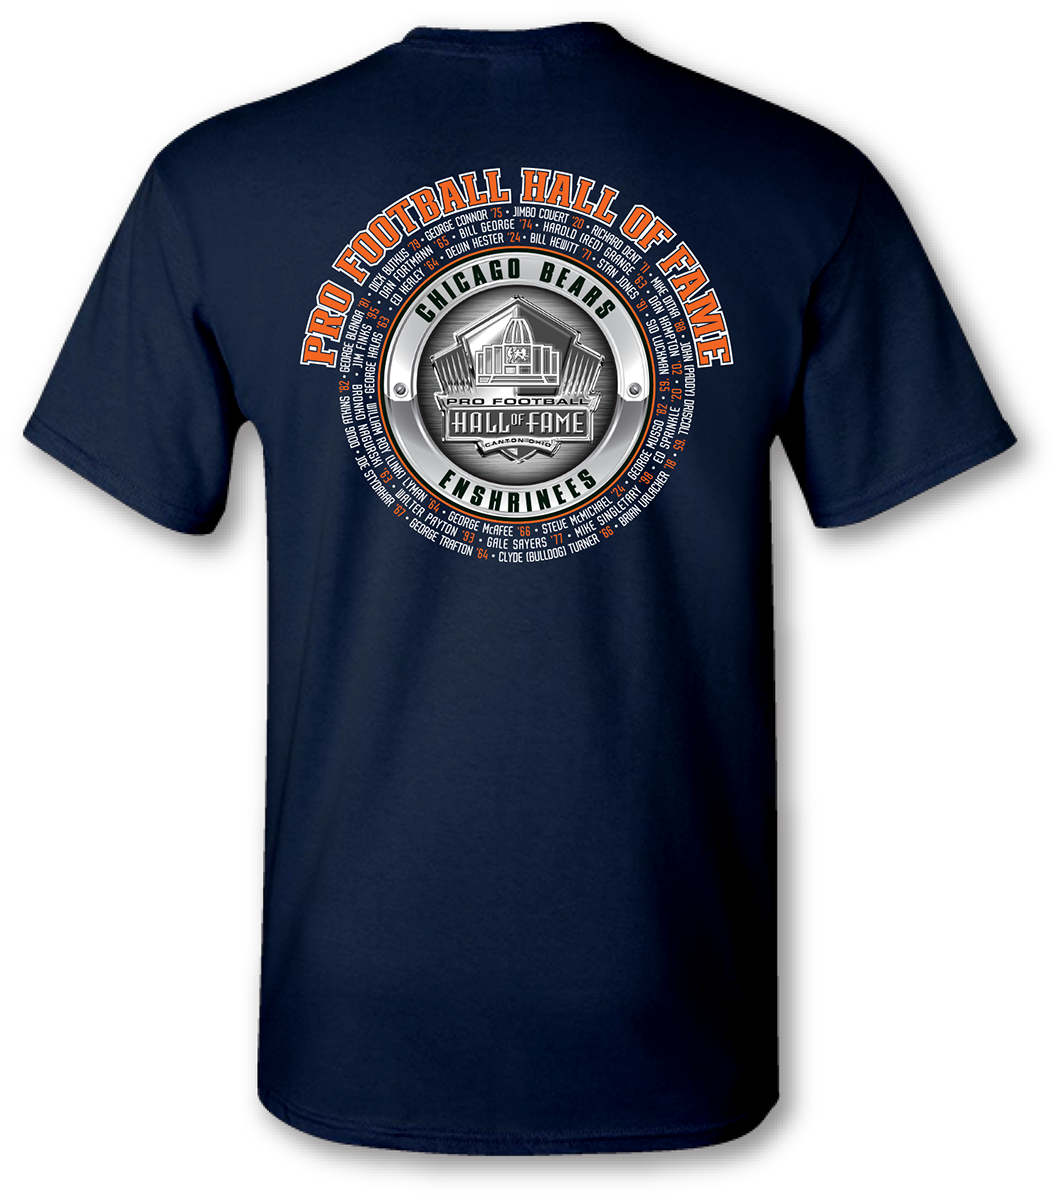 Bears Hall of Fame Legends T-Shirt 2024